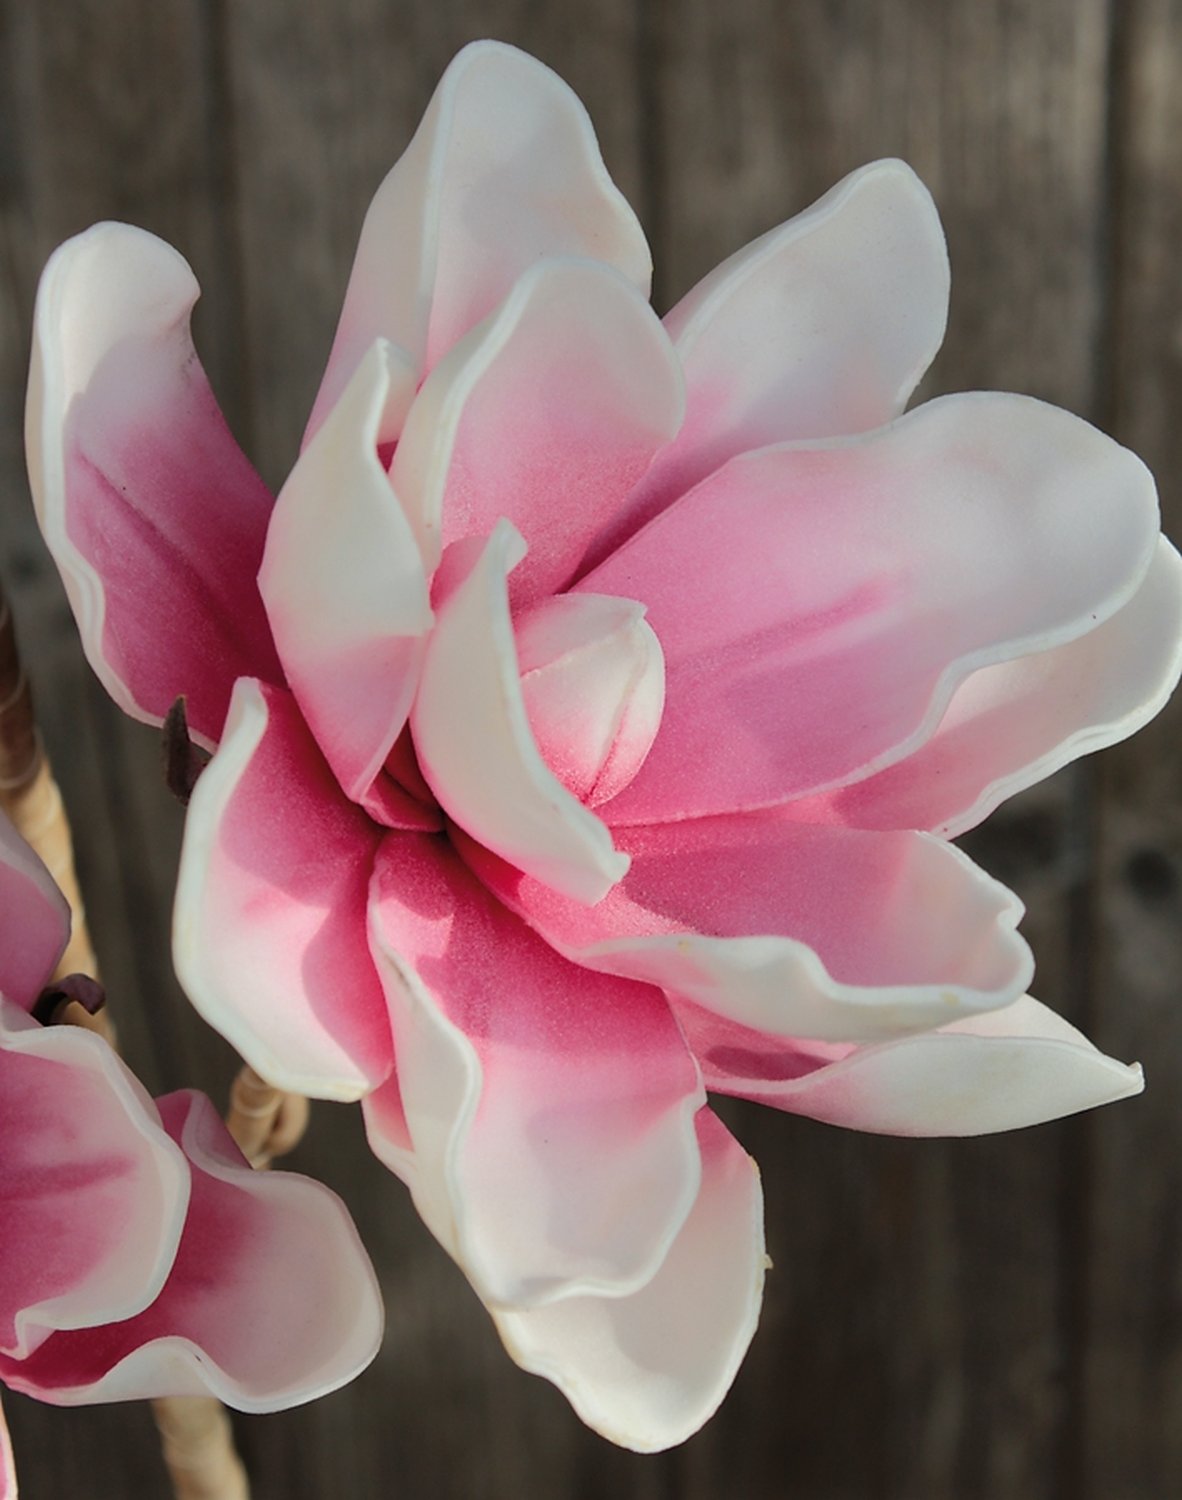 Artificial soft flower 'magnolia', 112 cm, pink-white